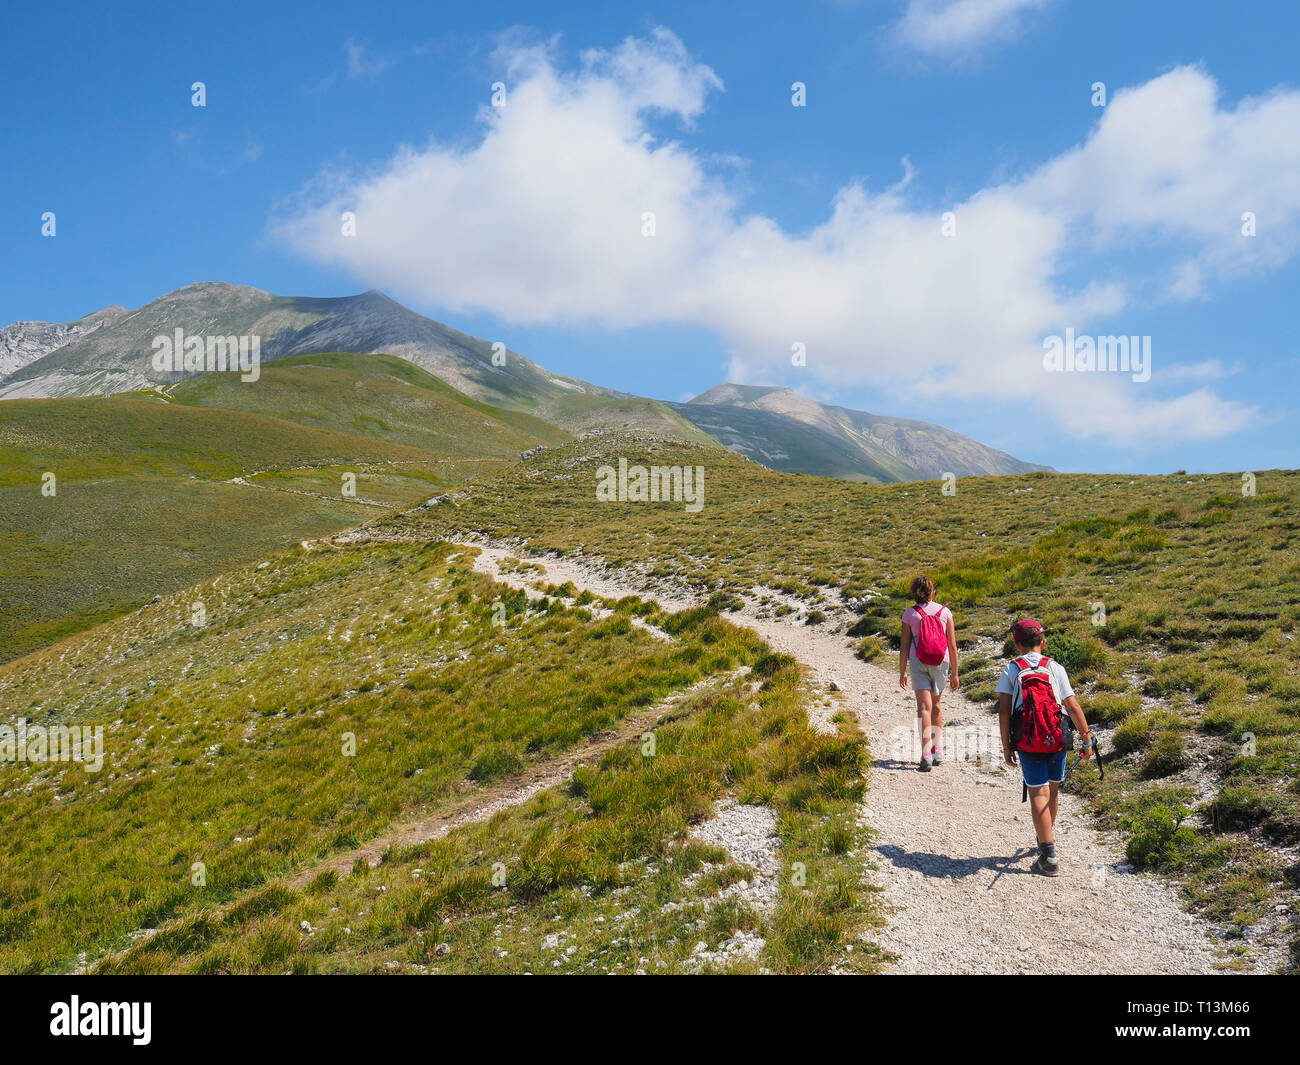 Italy, Umbria, Sibillini mountains, two children hiking mount Vettore Stock Photo